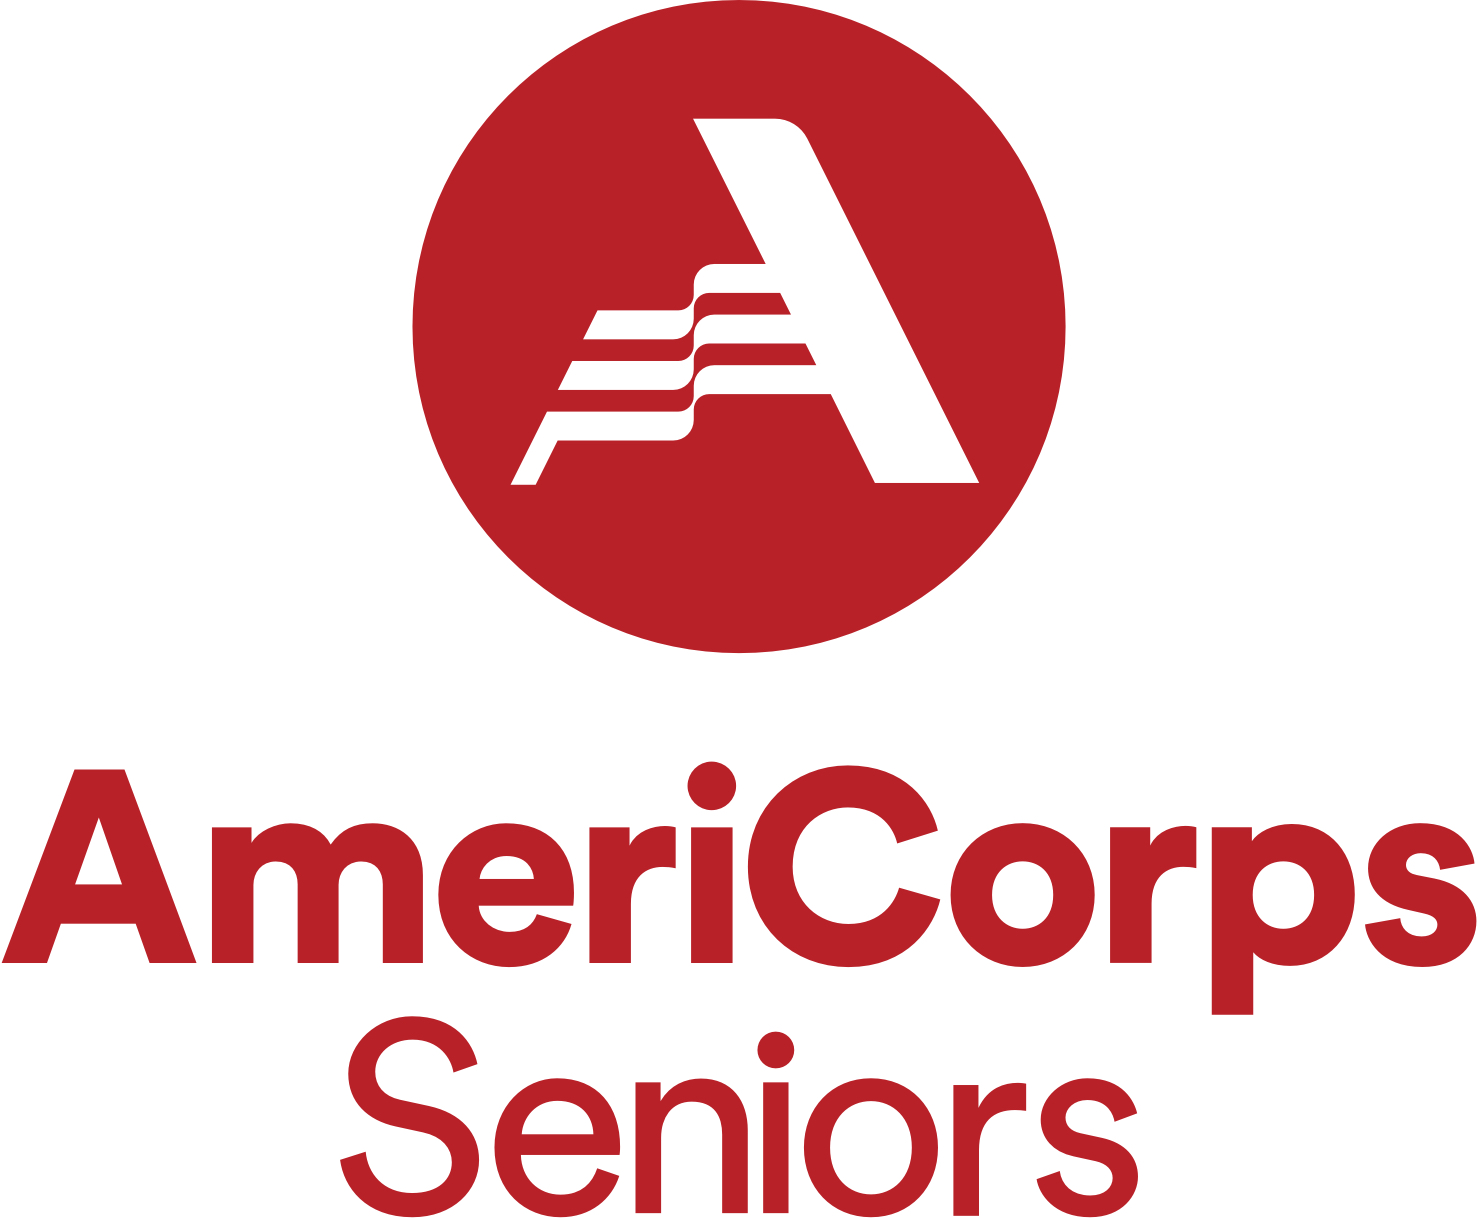 Do Americorps seniors get paid?